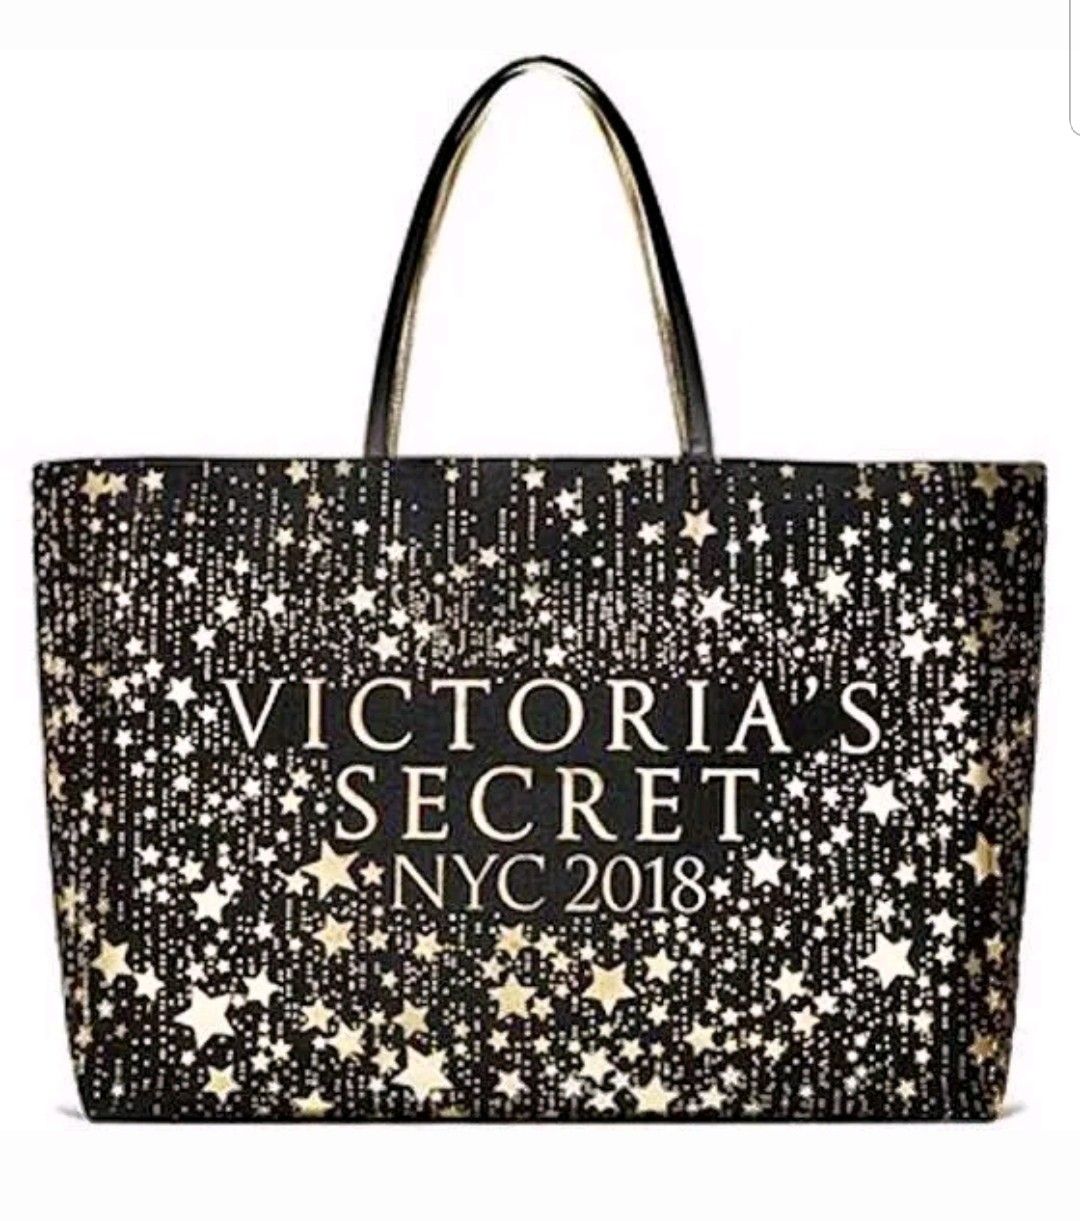 Brand New Victoria's Secret Bag